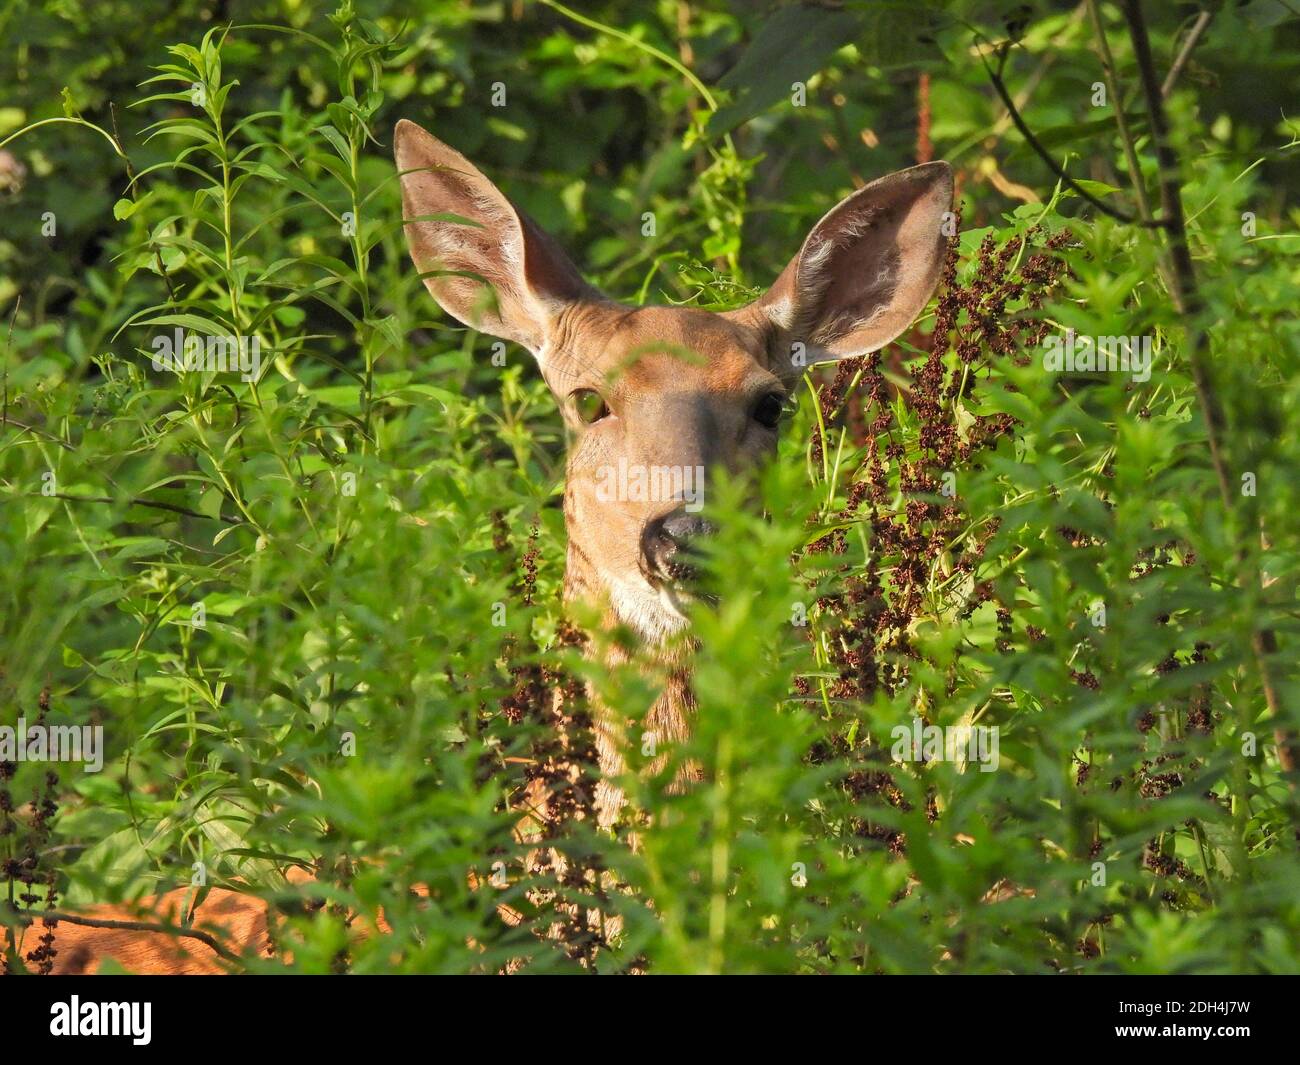 Female Deer Doe Close Up of Face Hiding Among High Green Foliage Stock Photo